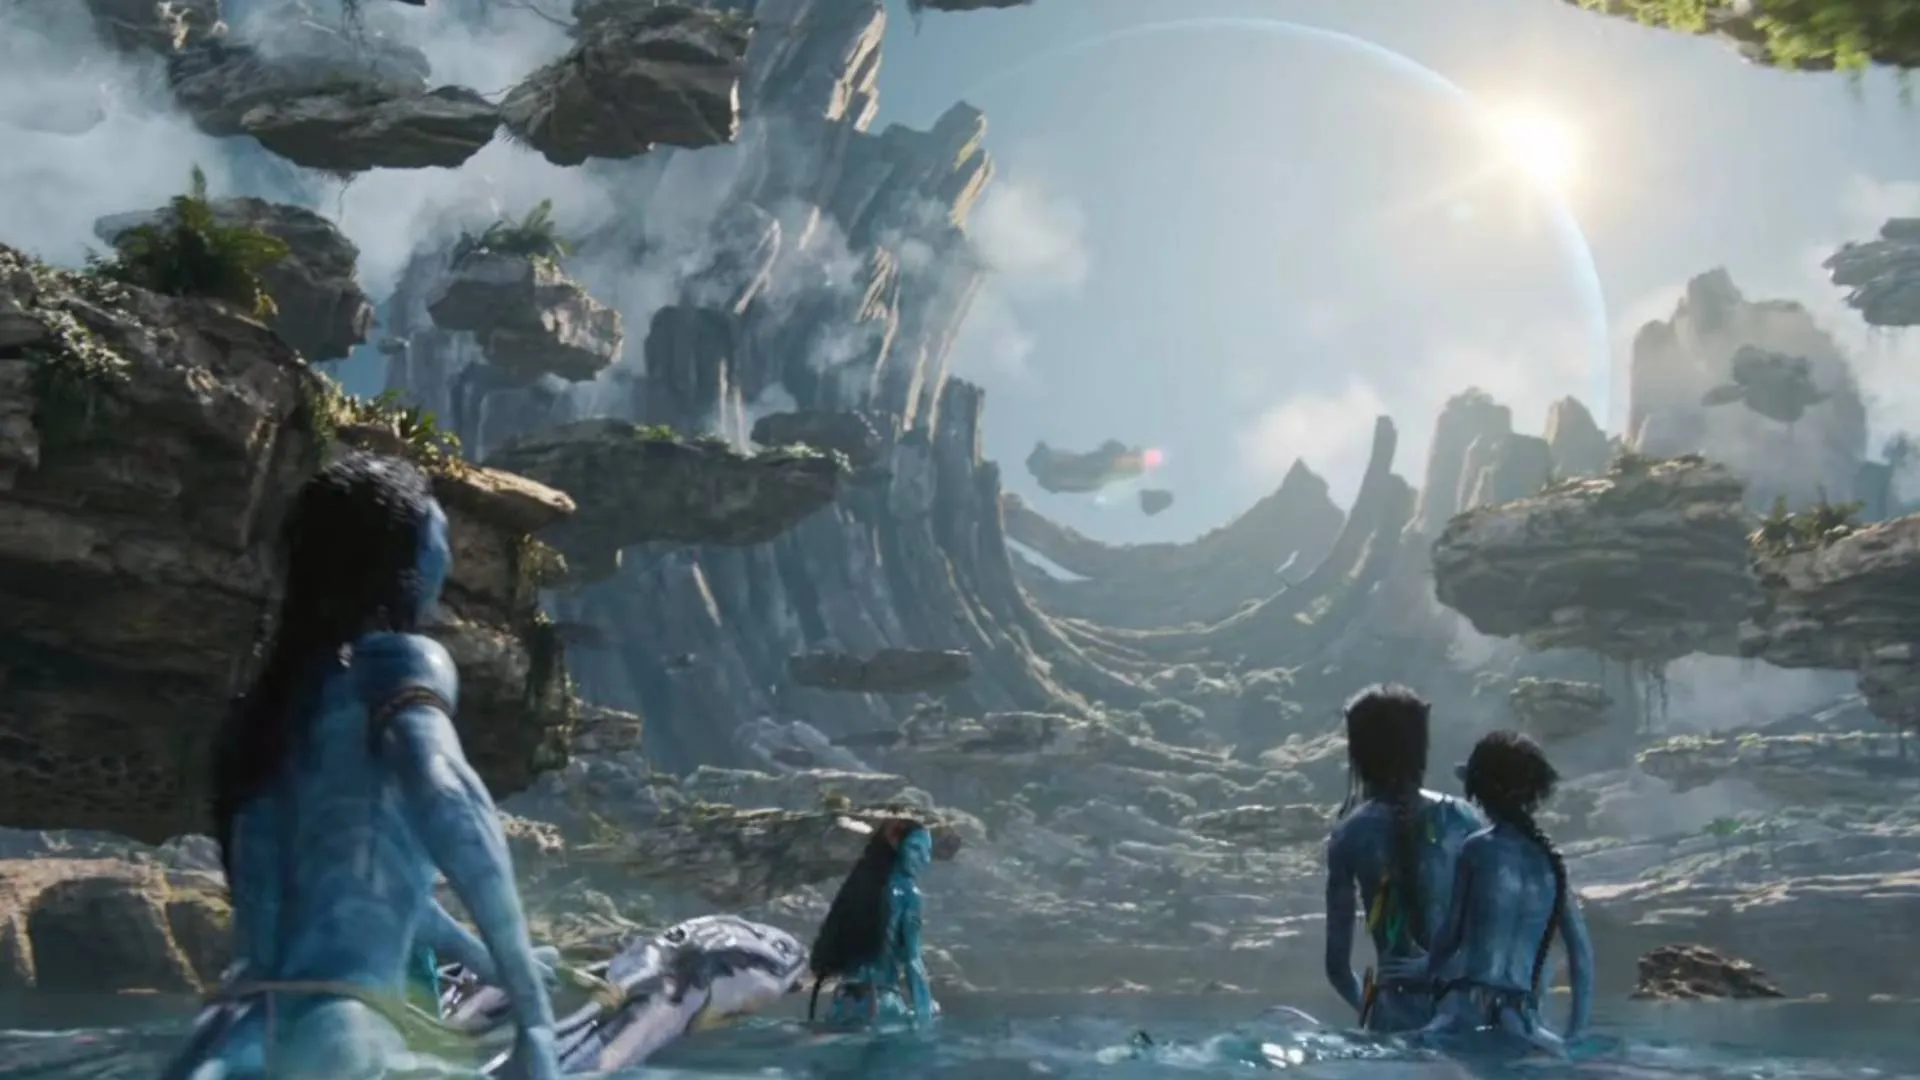 Cenas do filme: "Avatar: The Way of Water"